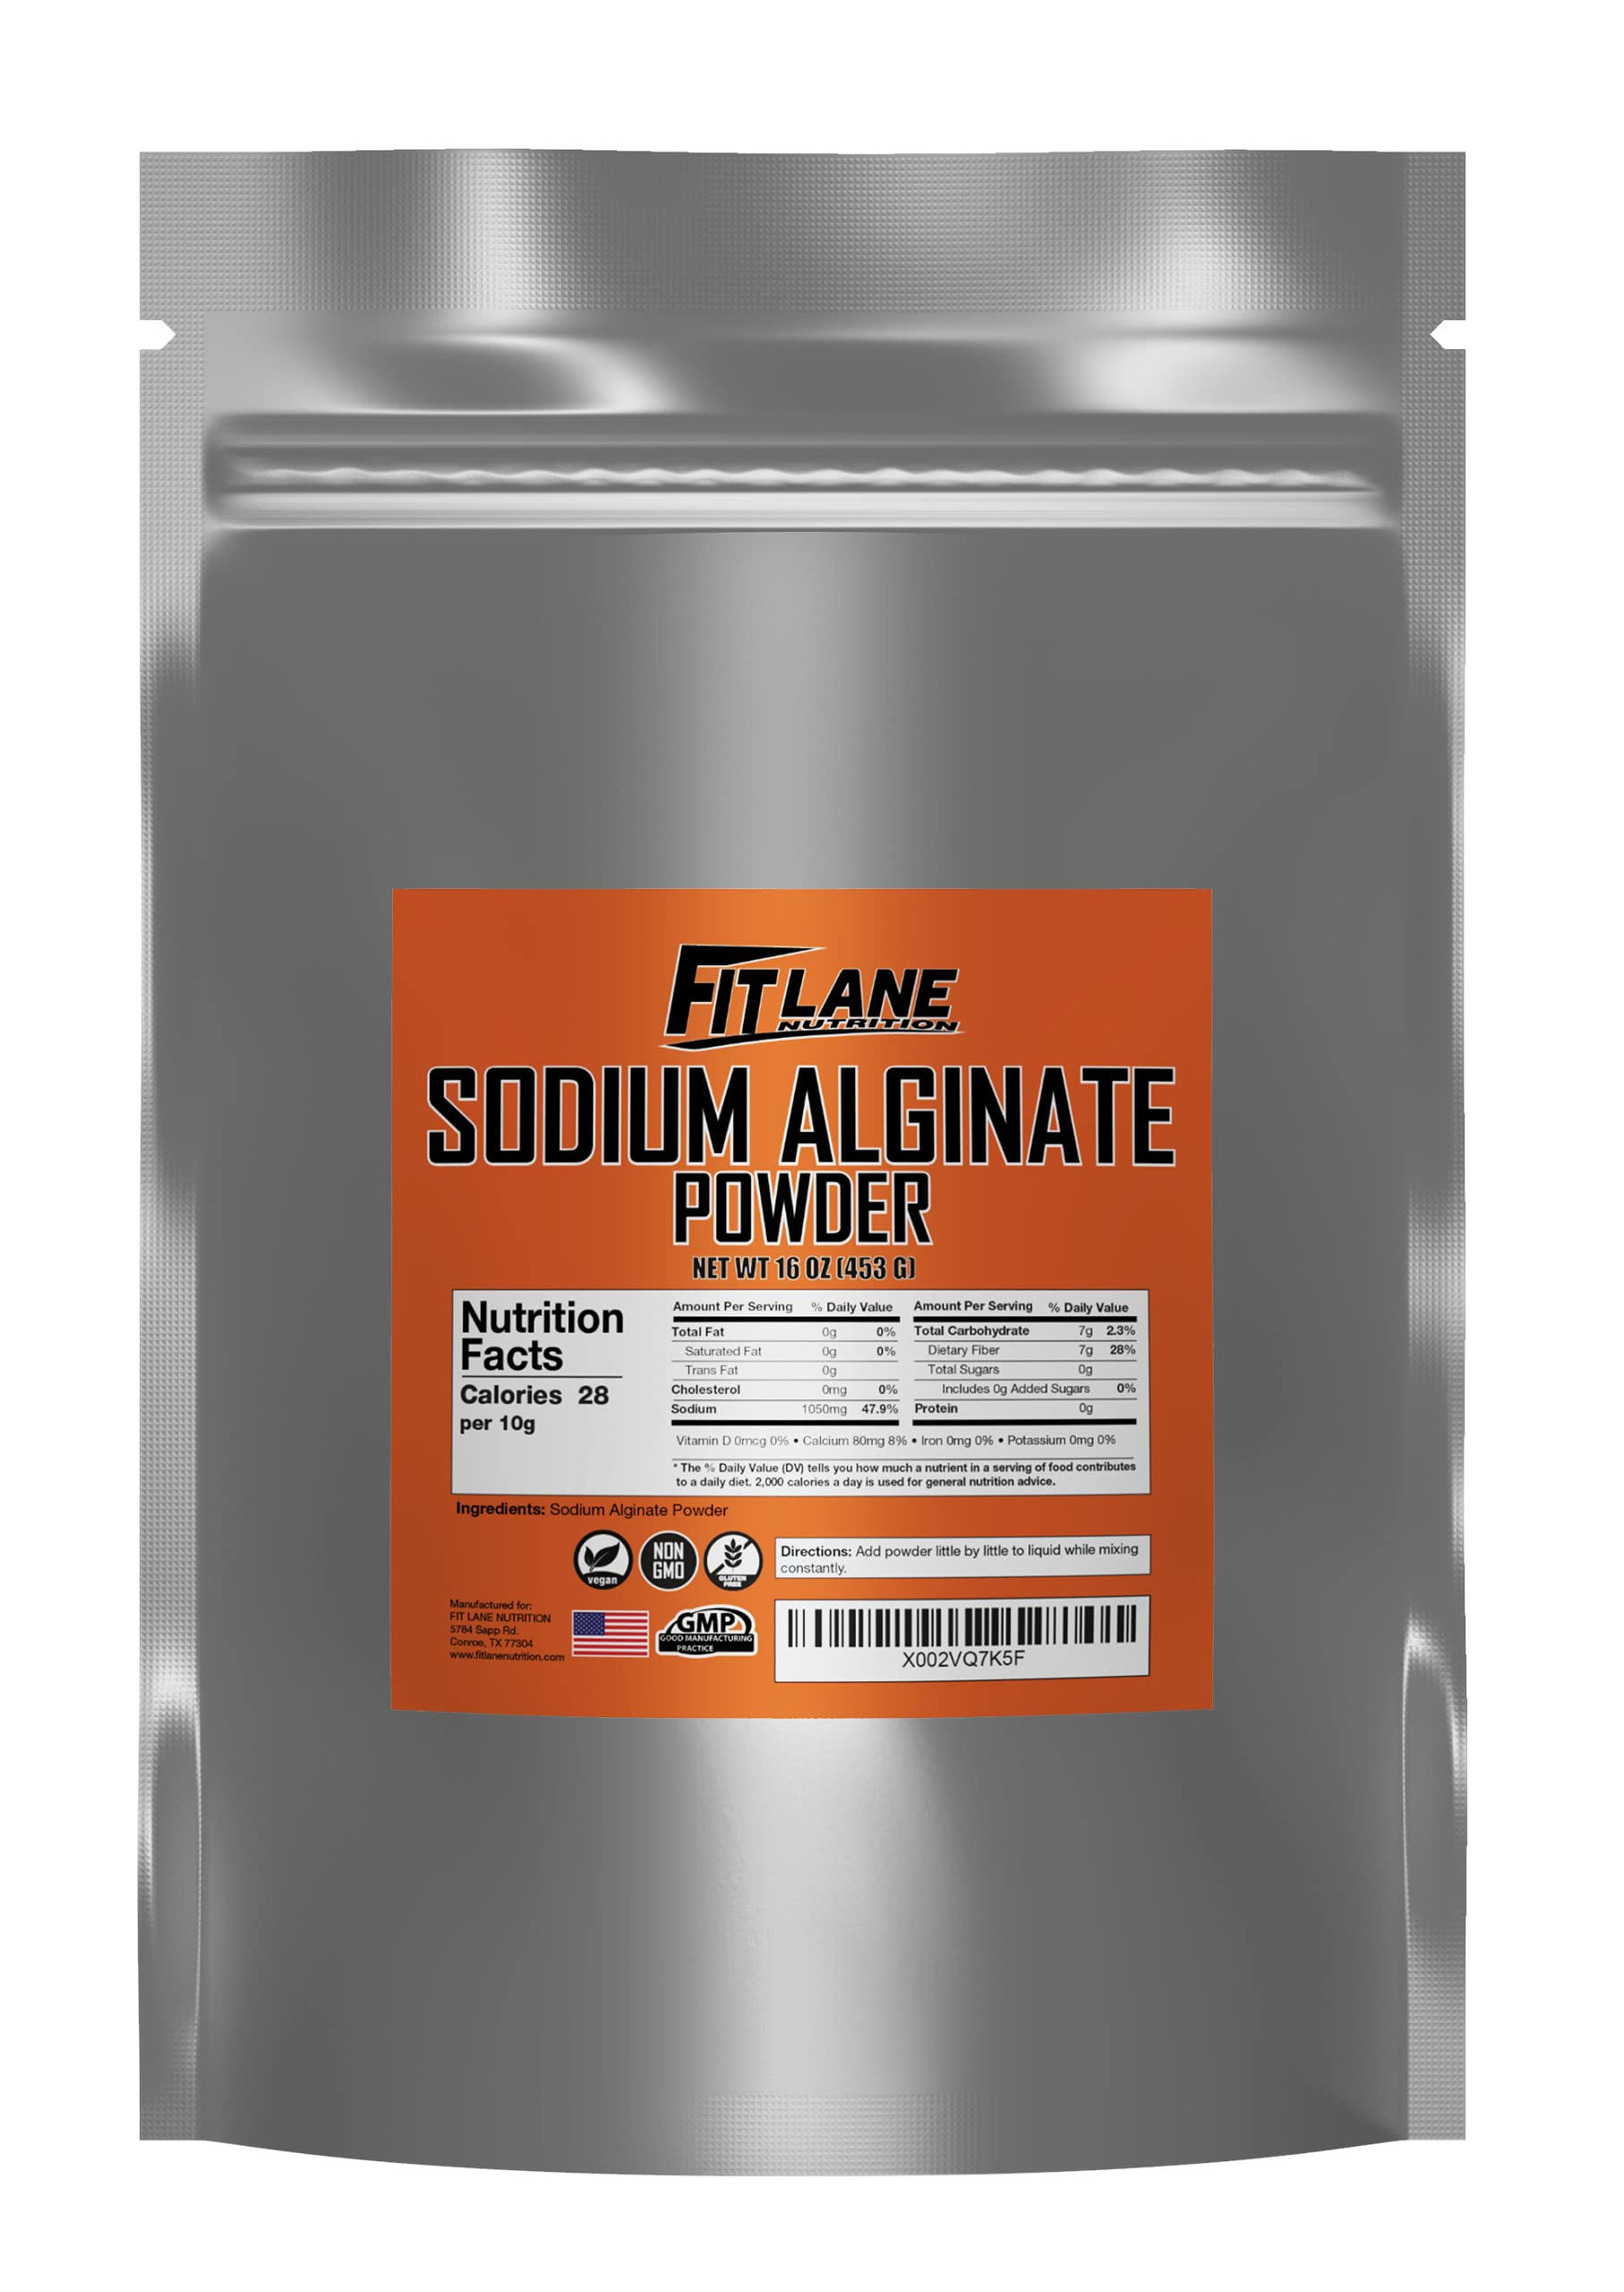 Inspired Ingredients - Sodium Alginate Powder (200g) - The Grocer